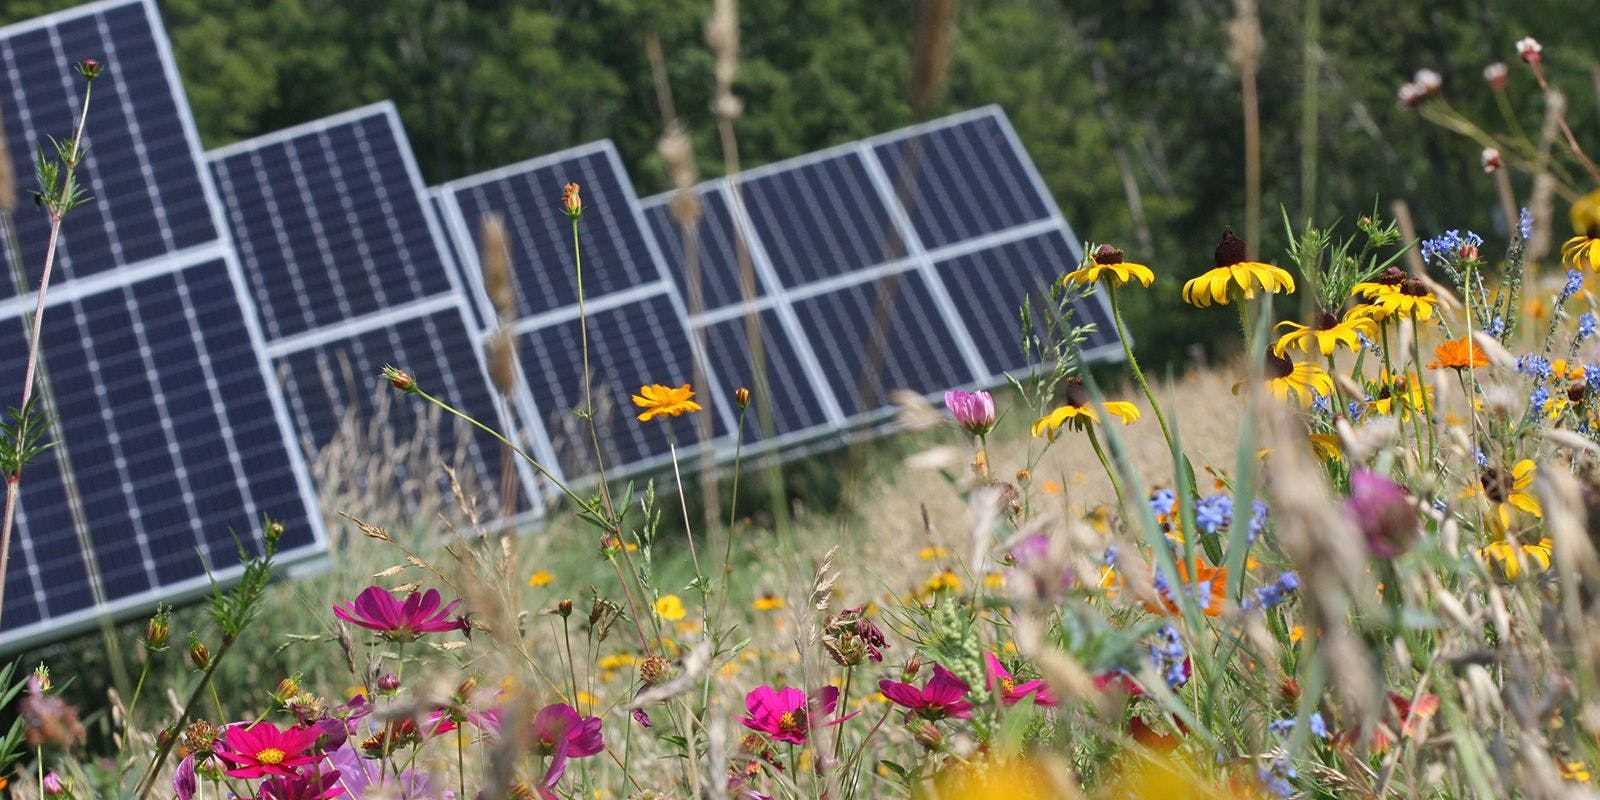 Colorful pollinator friendly flowers surround solar panels.